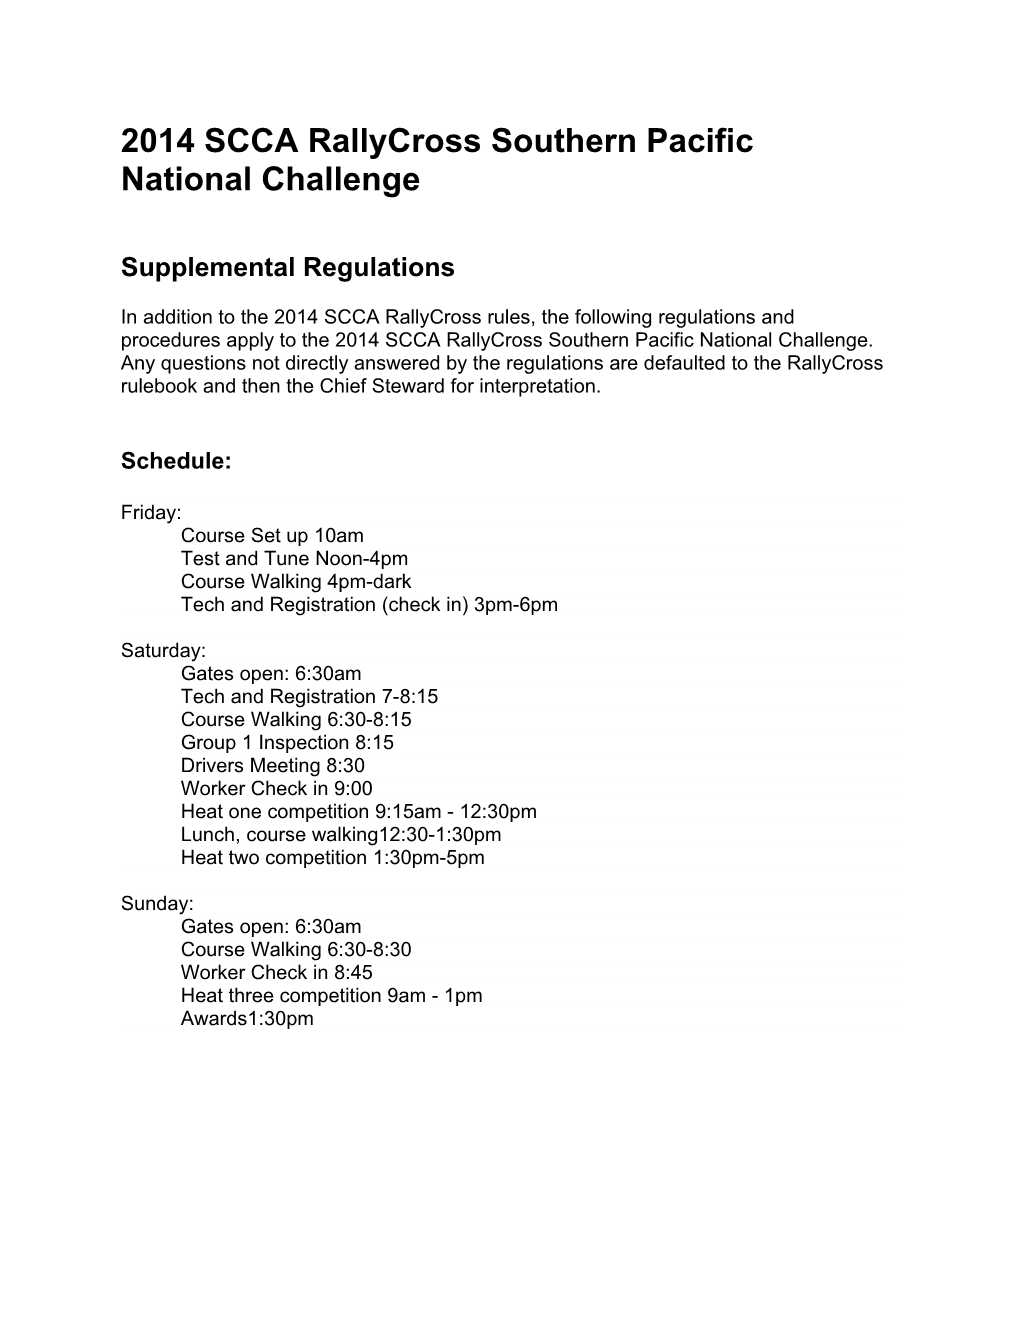 SCCA Rallycross National Championship